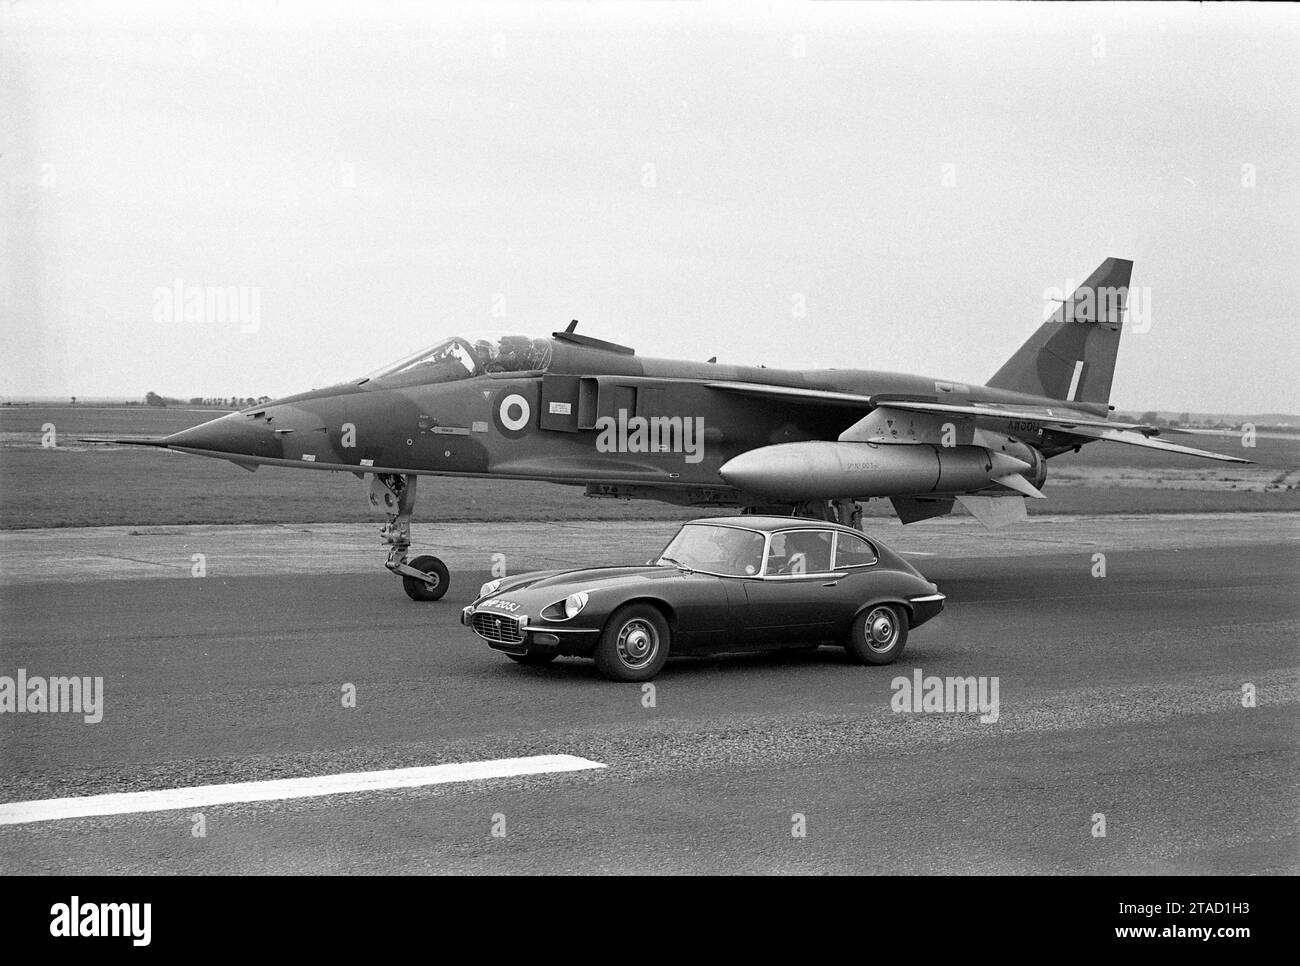 1971 Jaguar E-type Series 3, V12 engine, WHP 205J, parked beside RAF Sepecat prototype Jaguar fighter aircraft on runway Stock Photo